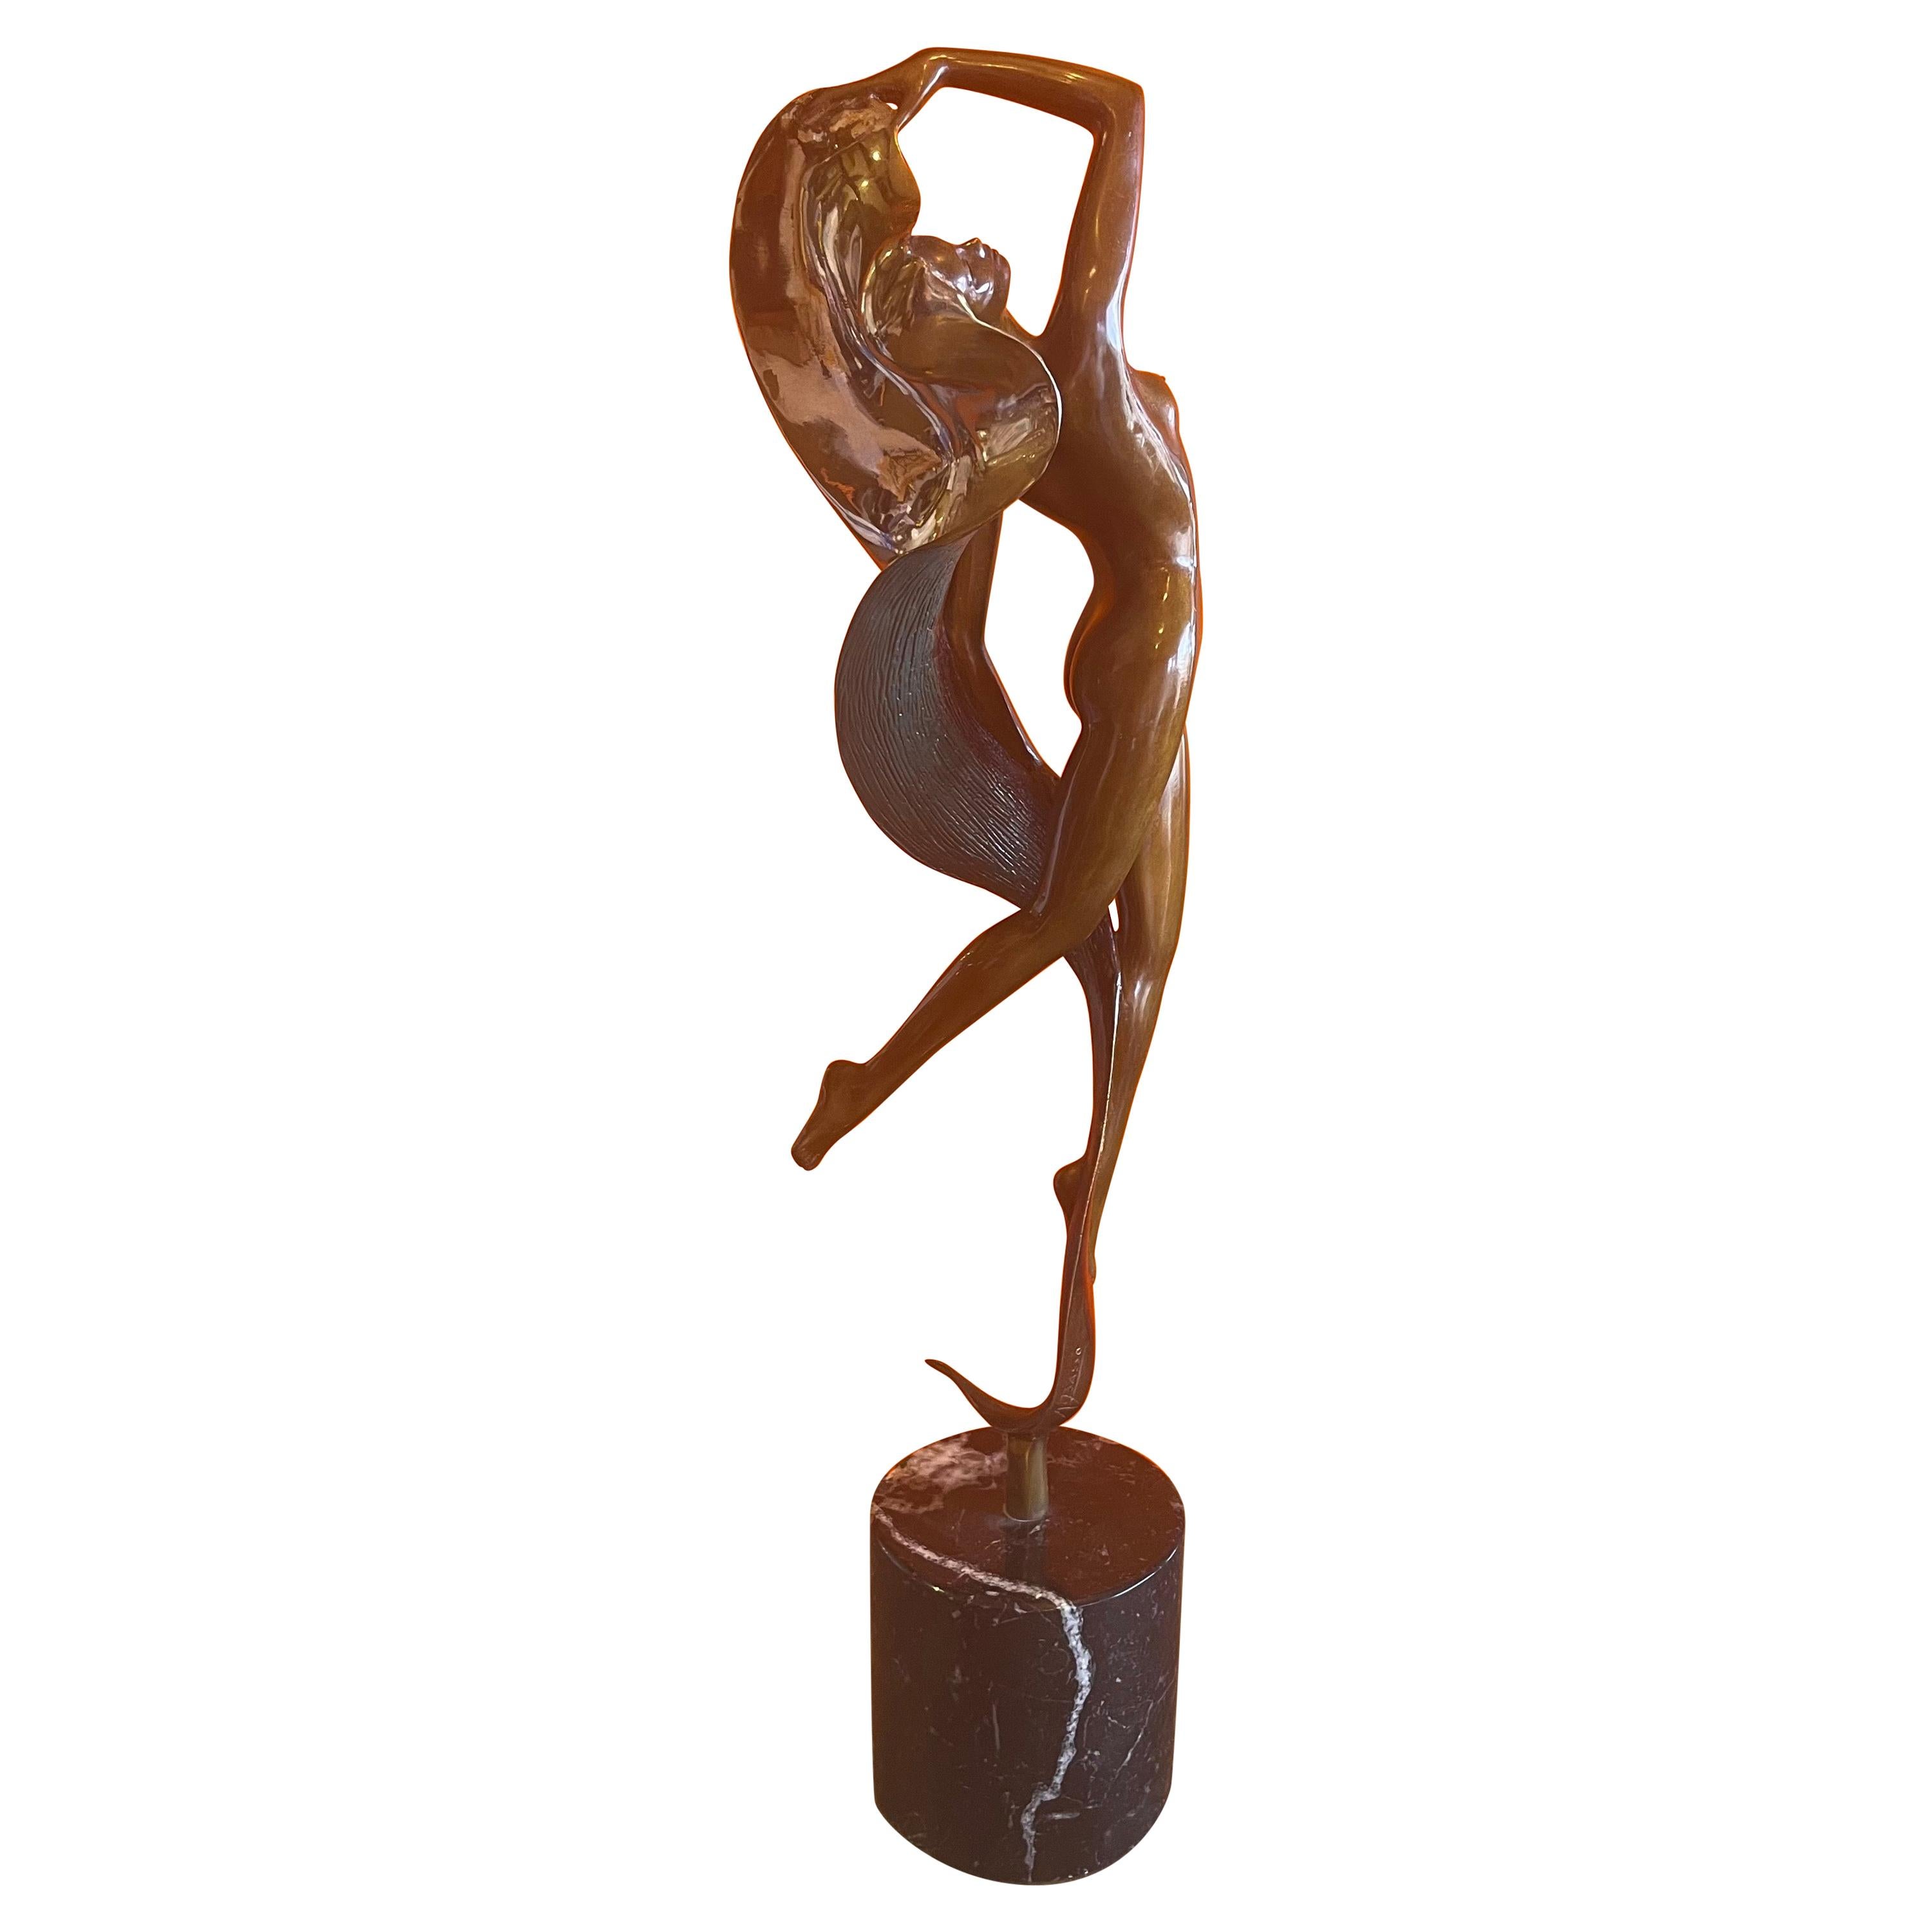 Art Deco Bronze Sculpture Entitled "Dance Step" by Angelo Basso